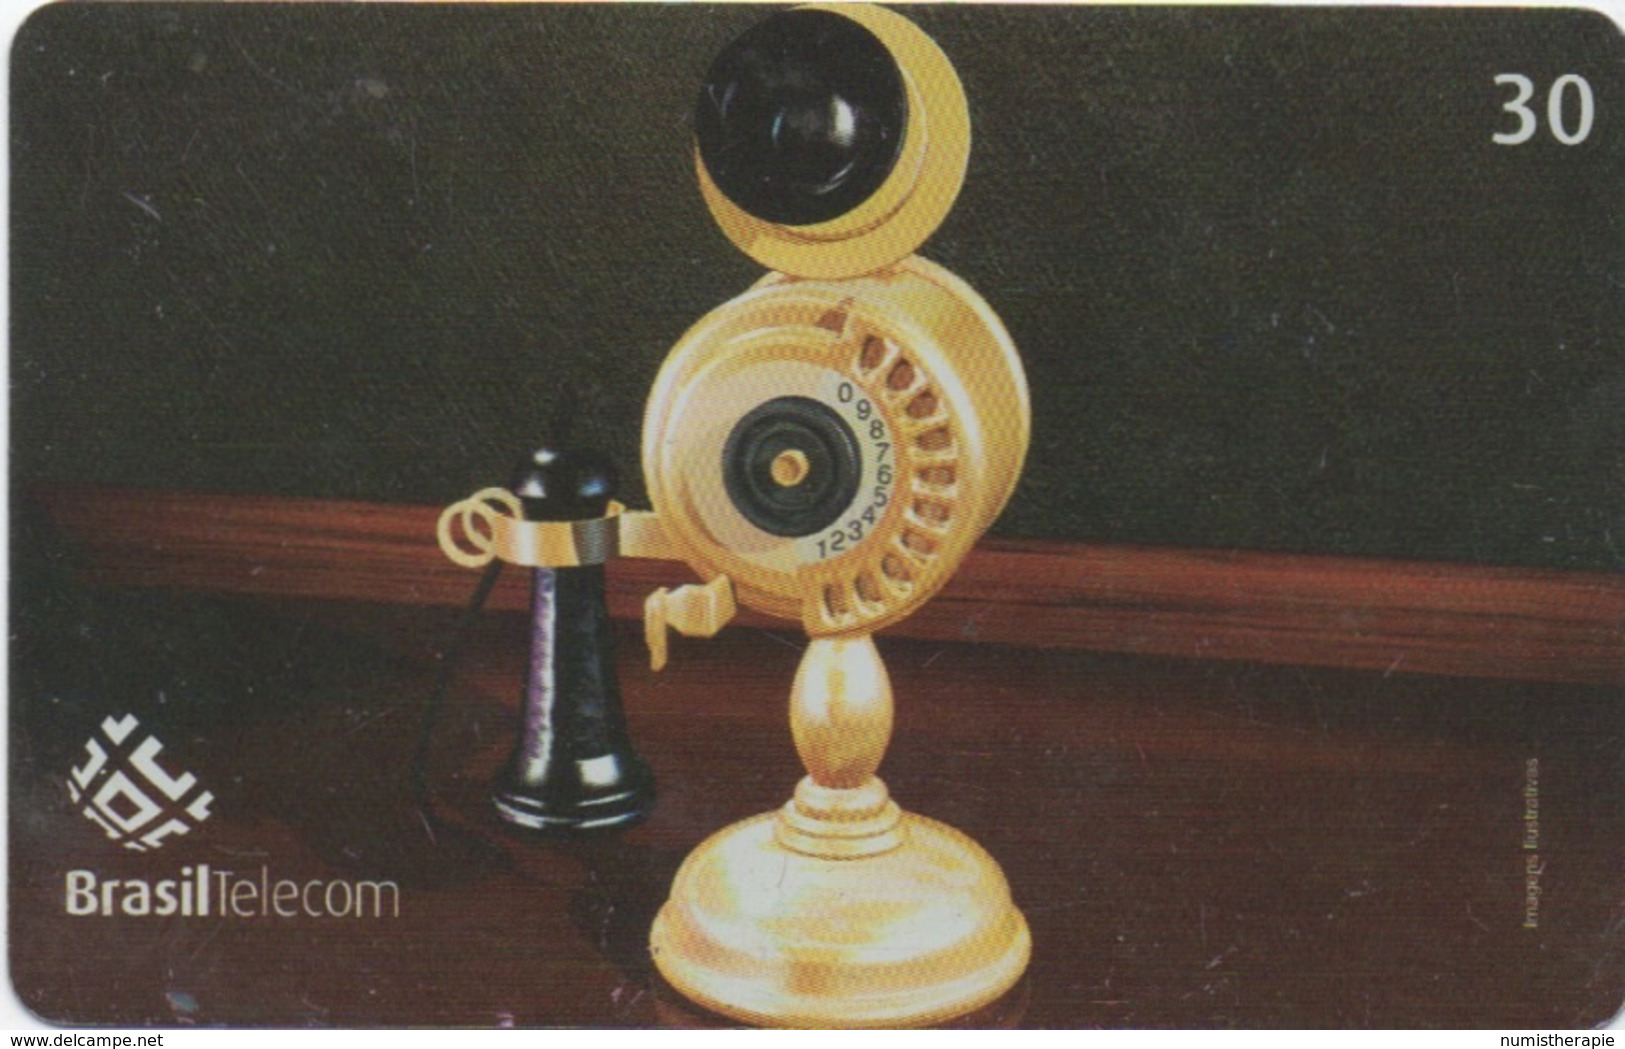 Brésil : 1905 Strowger 11 Digit - Telefone